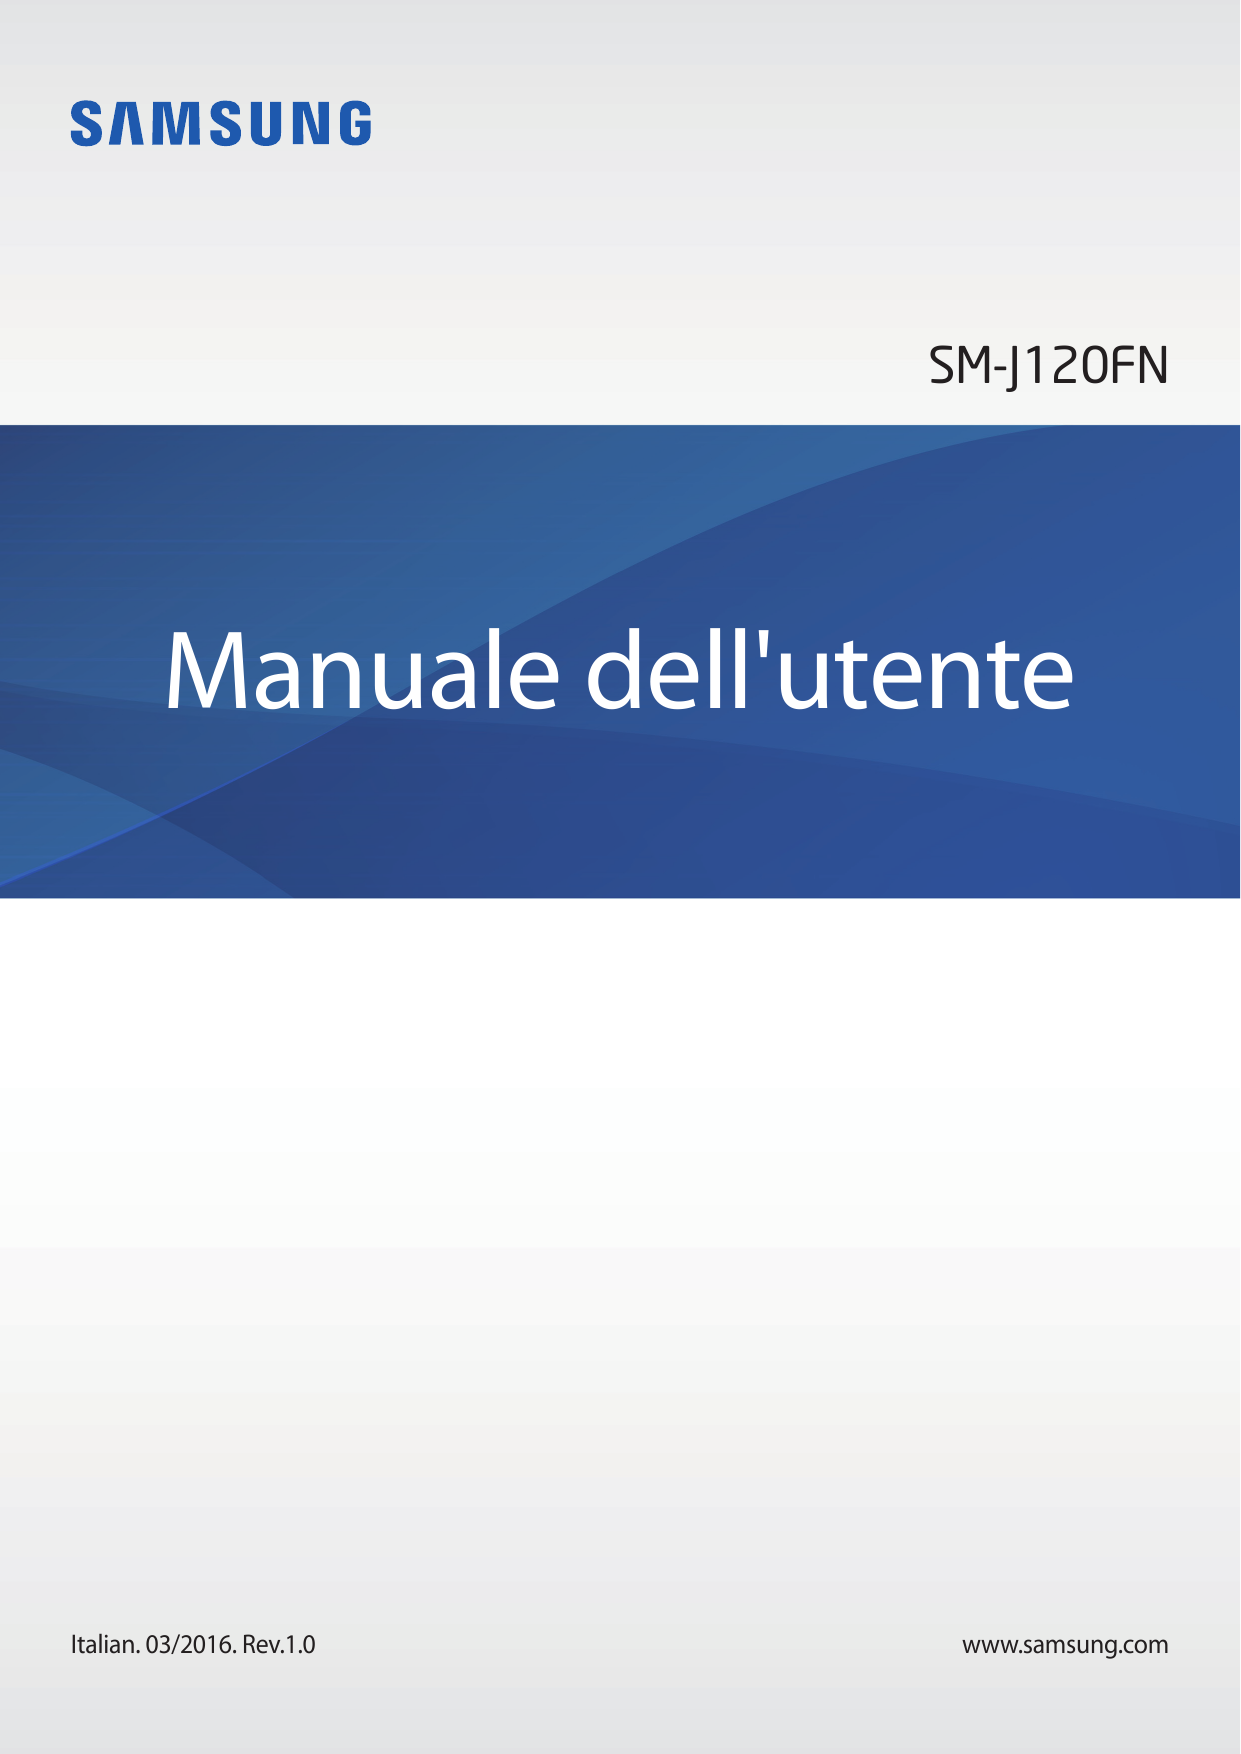 SM-J120FNManuale dell'utenteItalian. 03/2016. Rev.1.0www.samsung.com